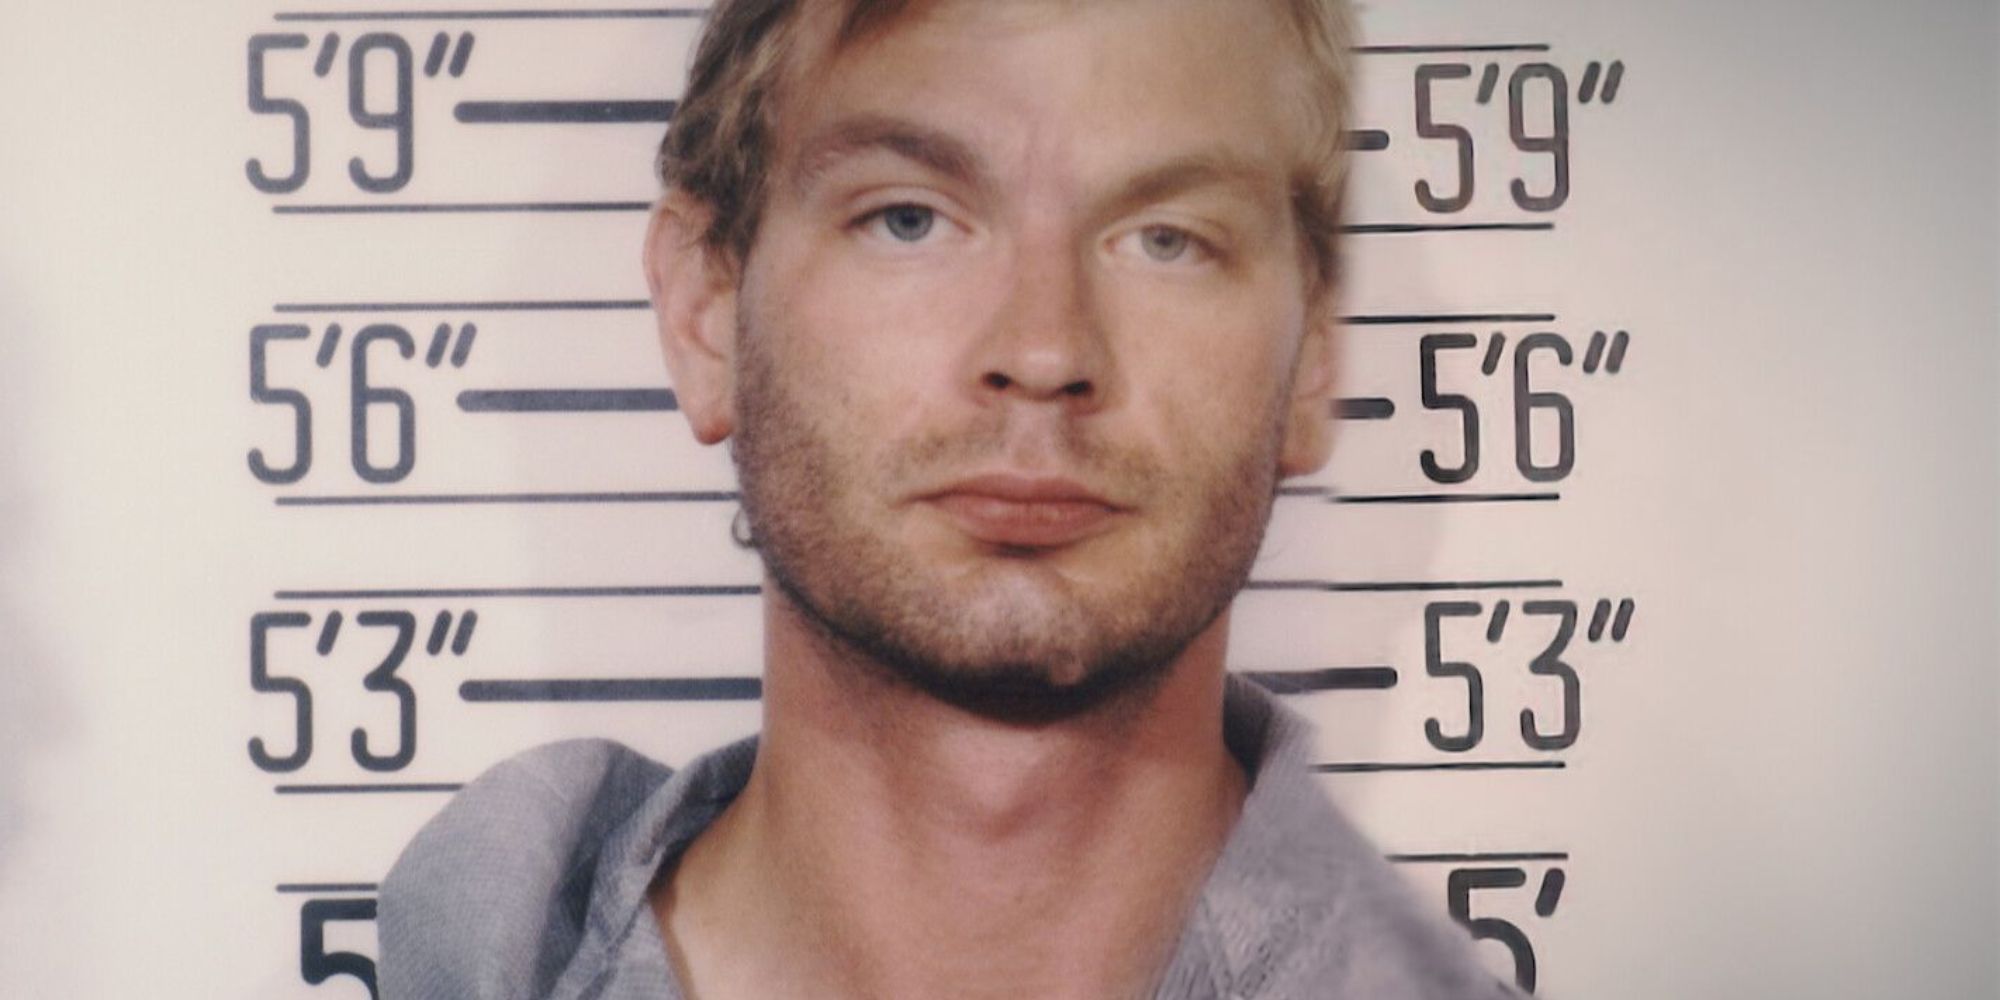 Jefferey Dahmer mugshot in 'Conversations with a Killer'